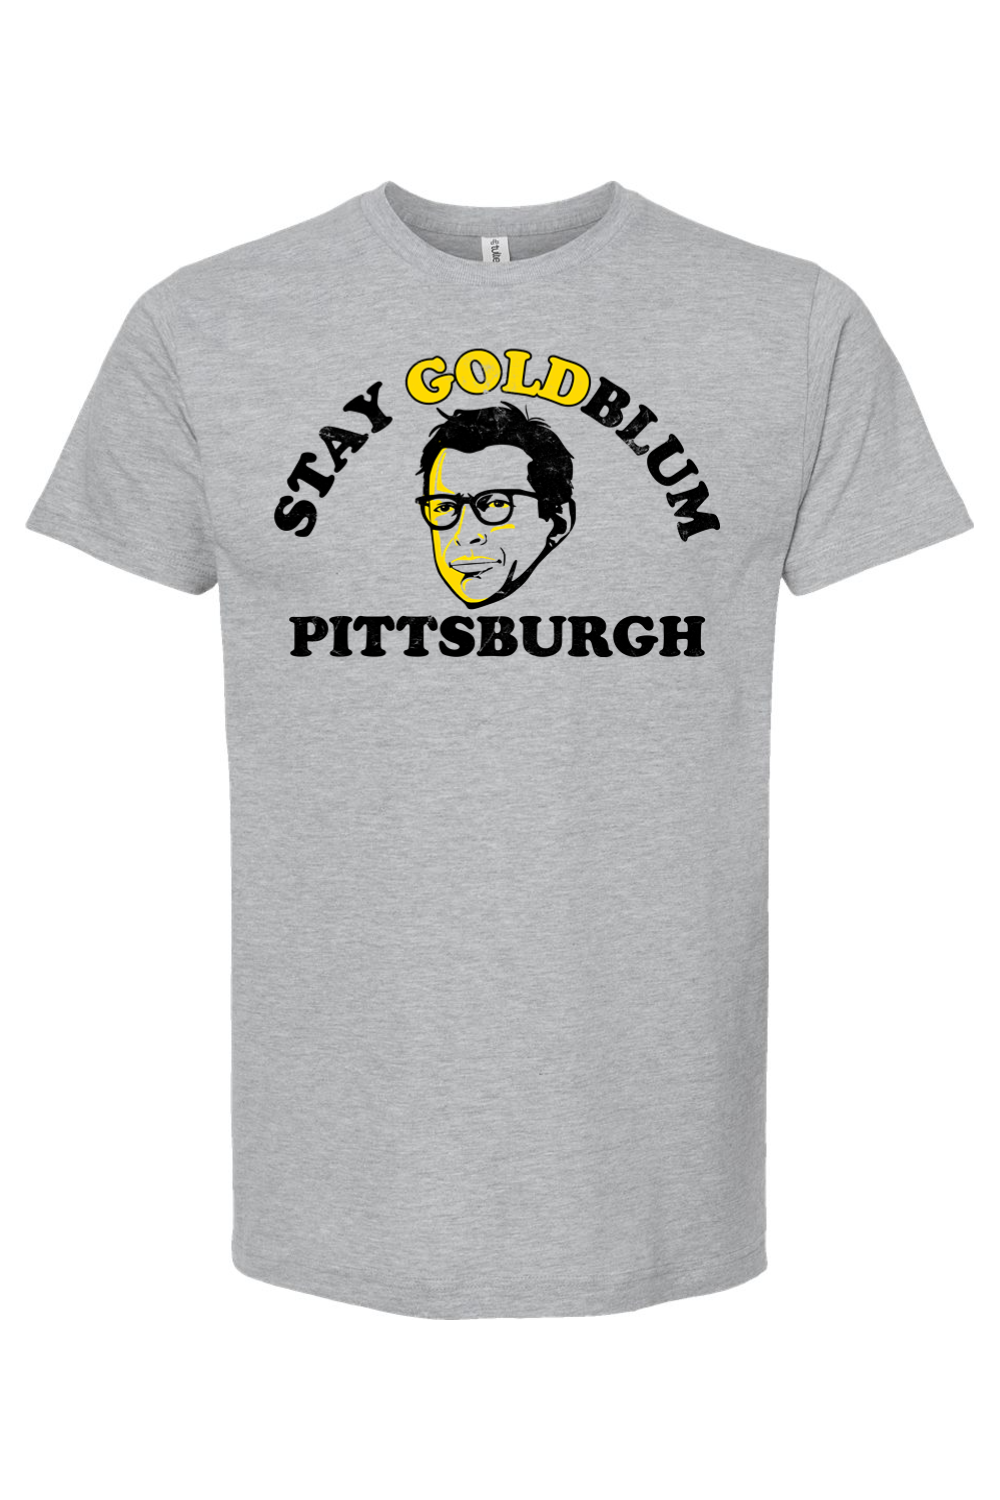 Stay Goldblum Pittsburgh - Yinzylvania